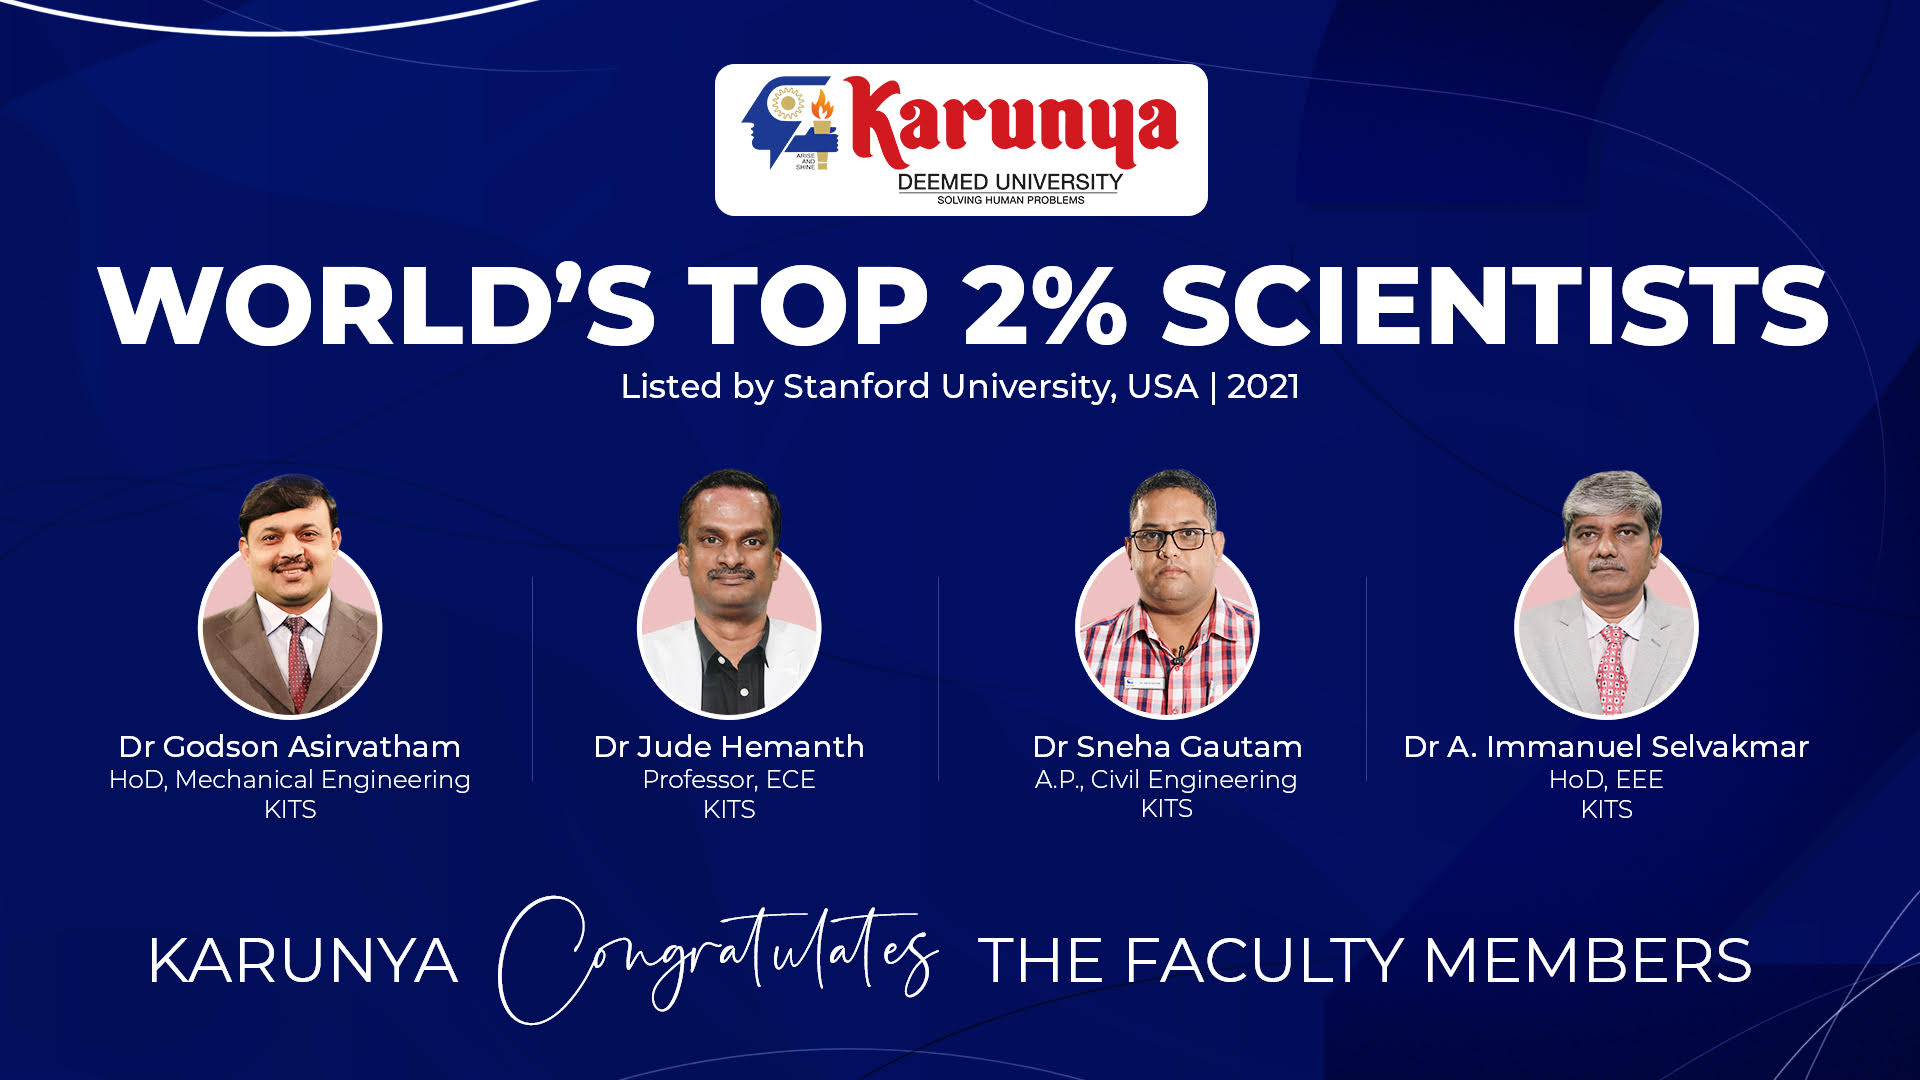 
World's top 2% scientists by Stanford University include professors from Karunya Deemed University - November 09, 2021- Karunya